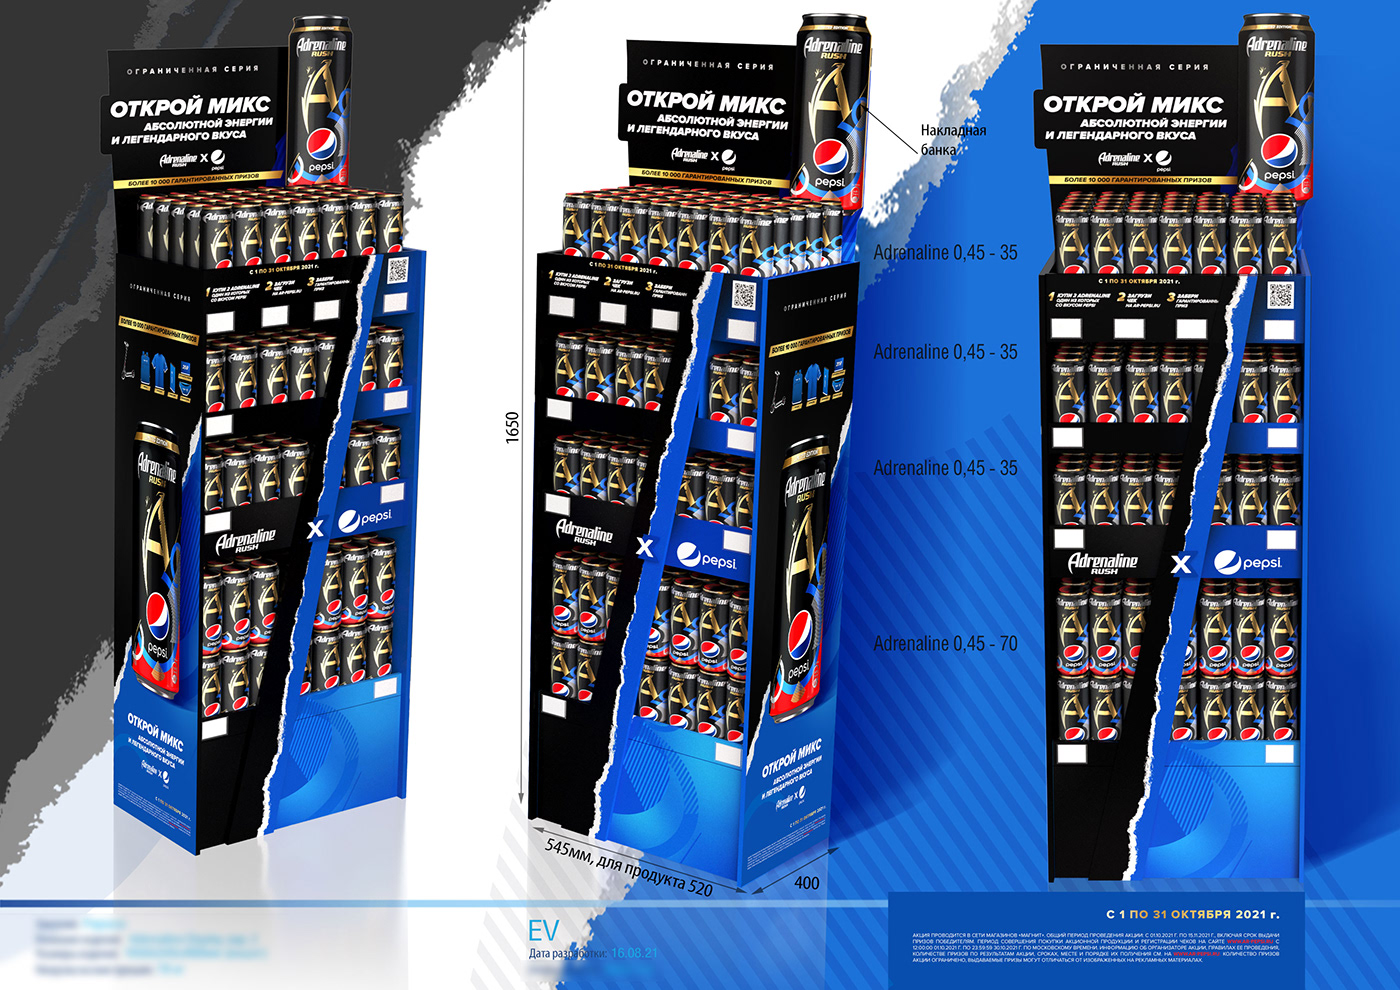 3D adrenaline Display instore miller pepsi pepsico posm Retail Stand